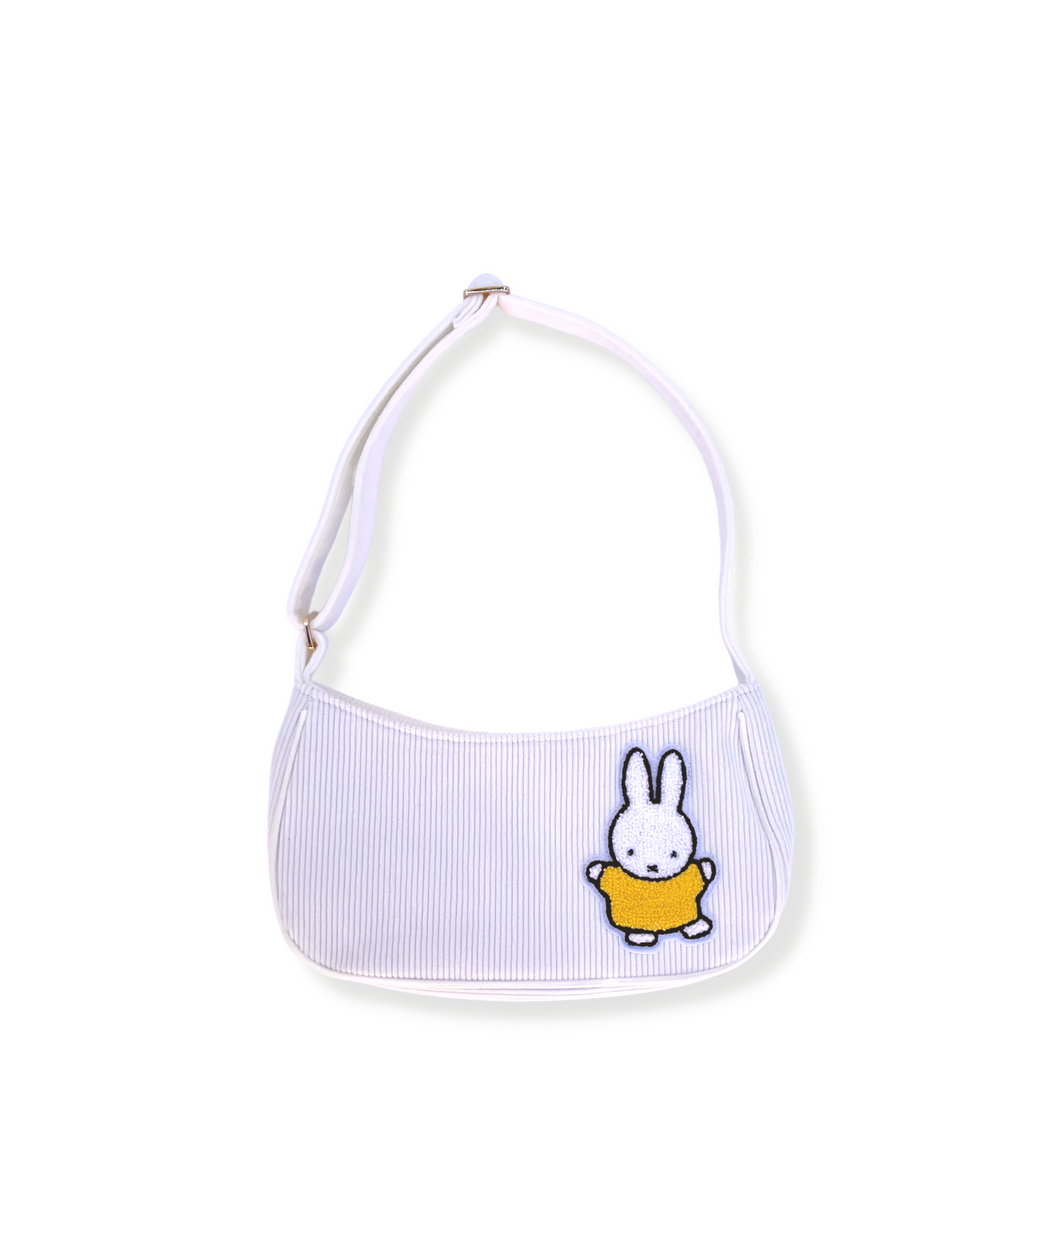 White Miffy Shoulder Bag